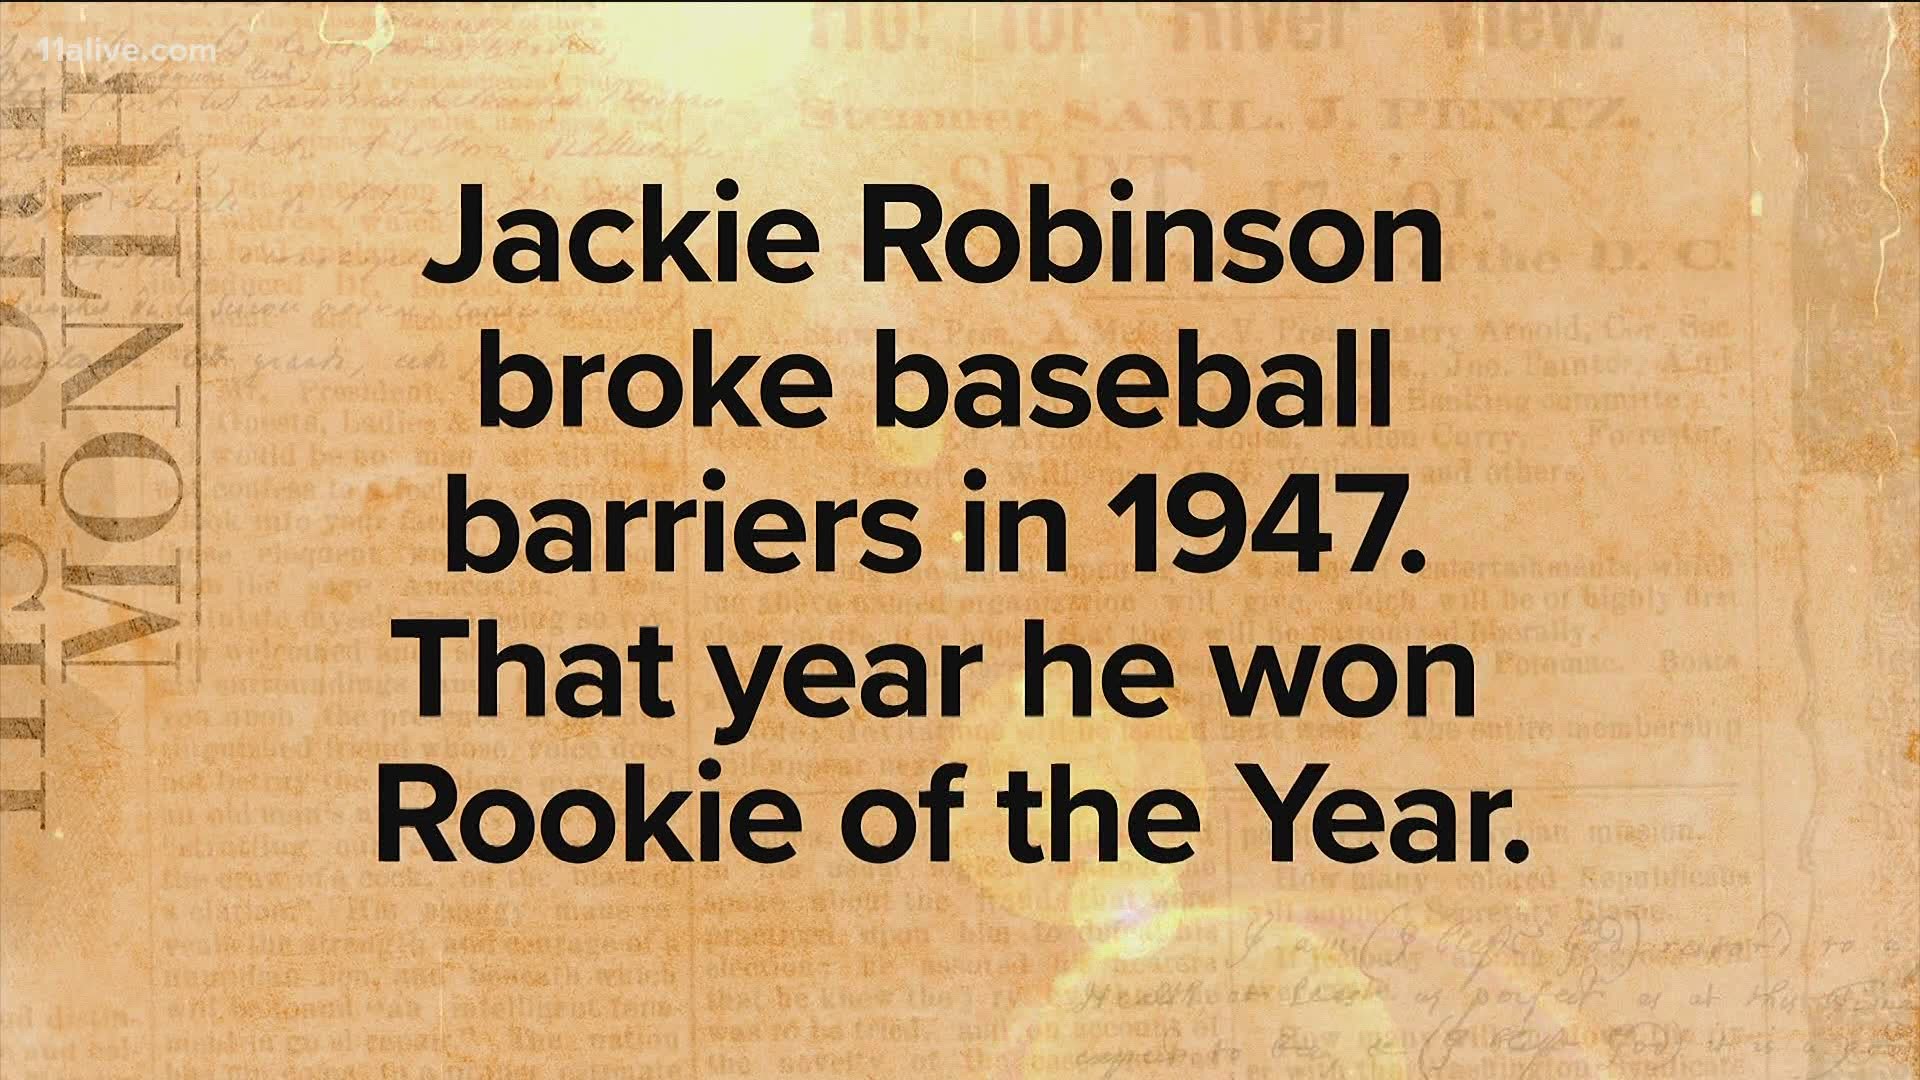 Robinson broke baseball barriers in 1947.